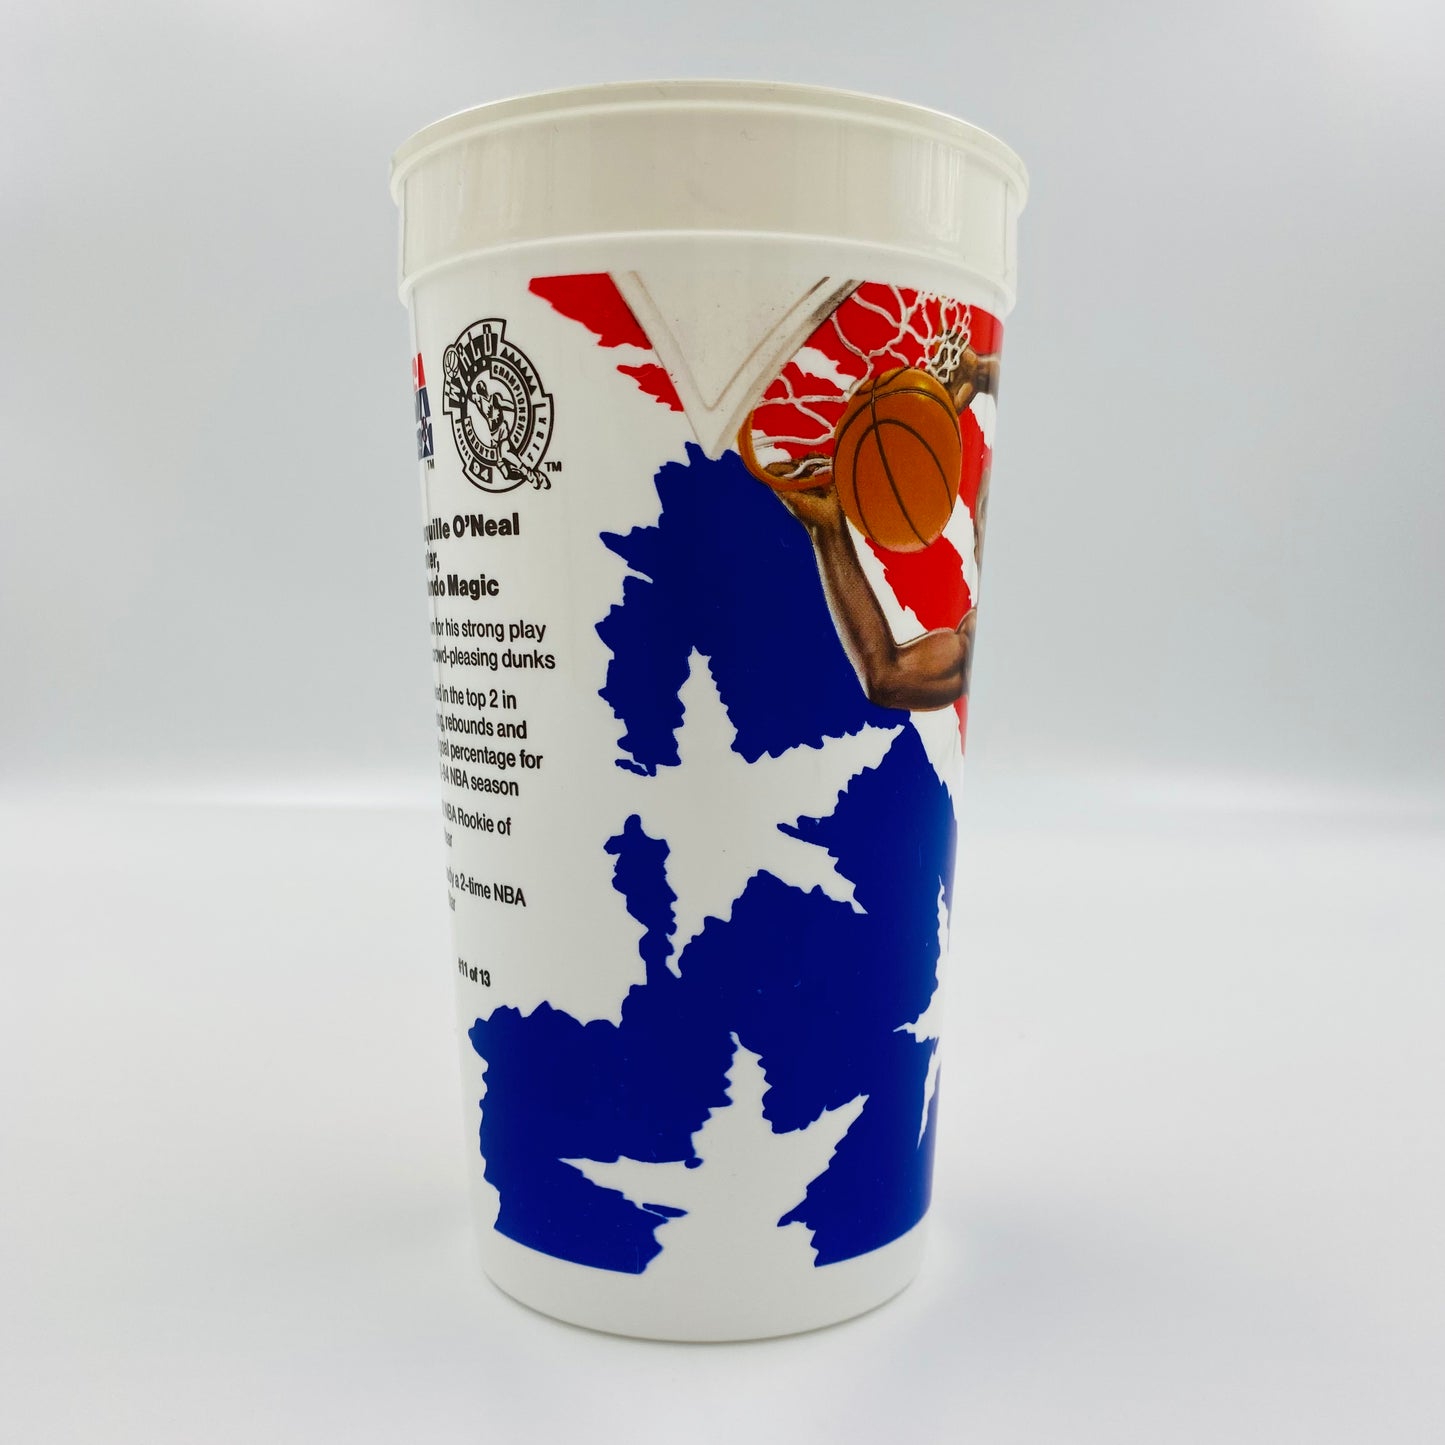 USA Basketball Dream Team II Shaquille “Shaq” O’Neal 32oz plastic cup (1994) McDonald's